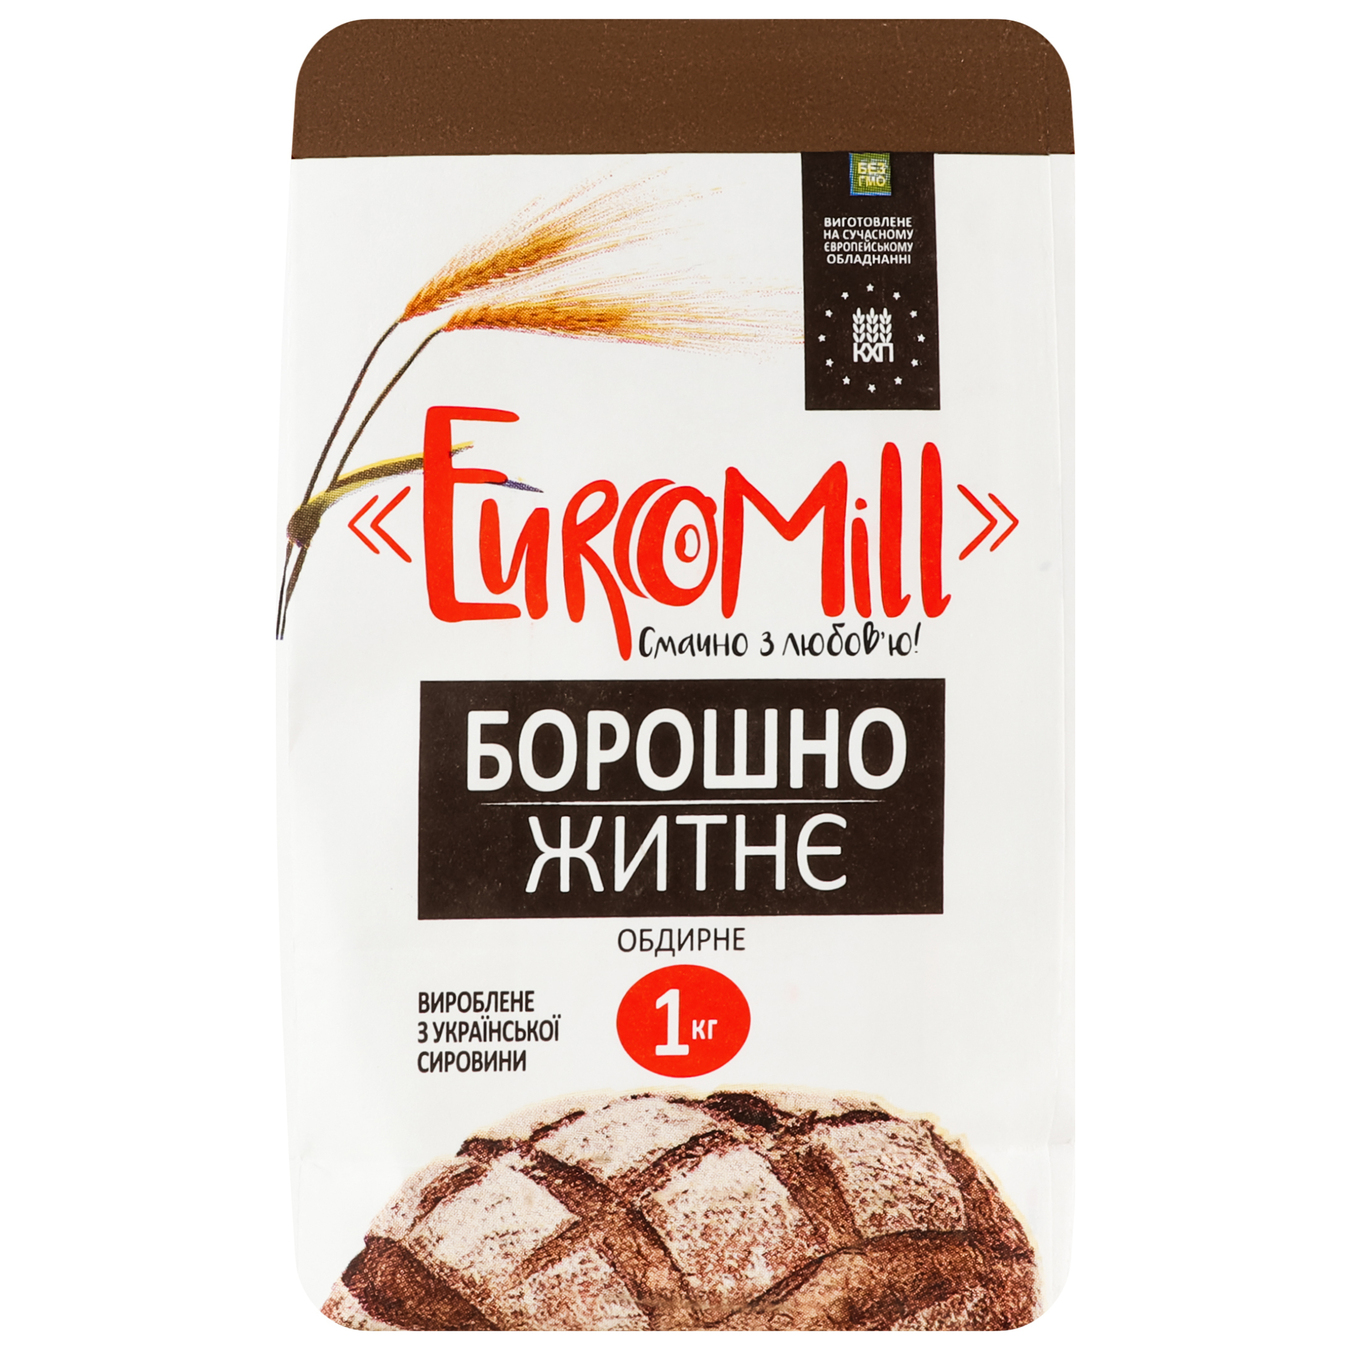 Борошно житнє EuroMill обдирне 1 кг